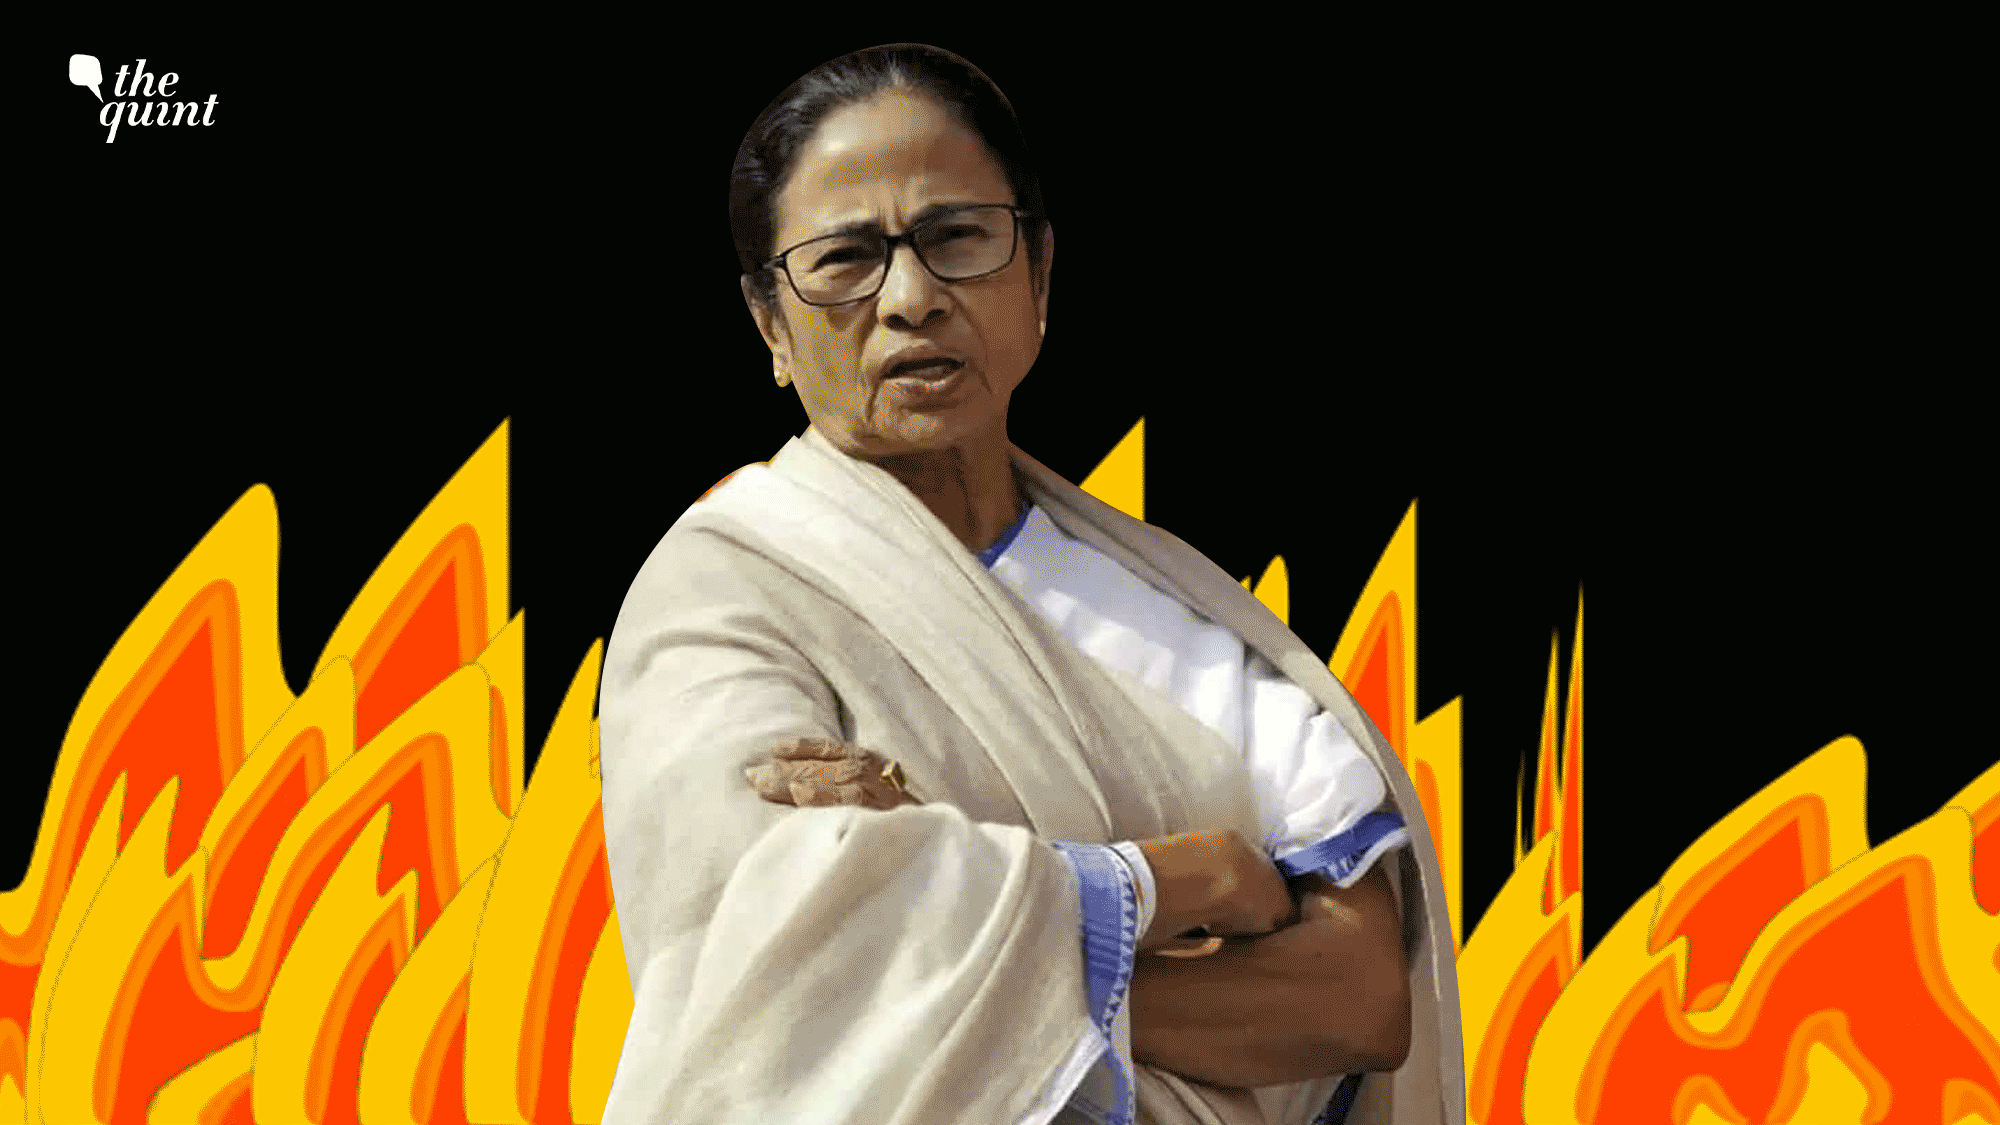 Image of Mamata Banerjee used for representational purposes.